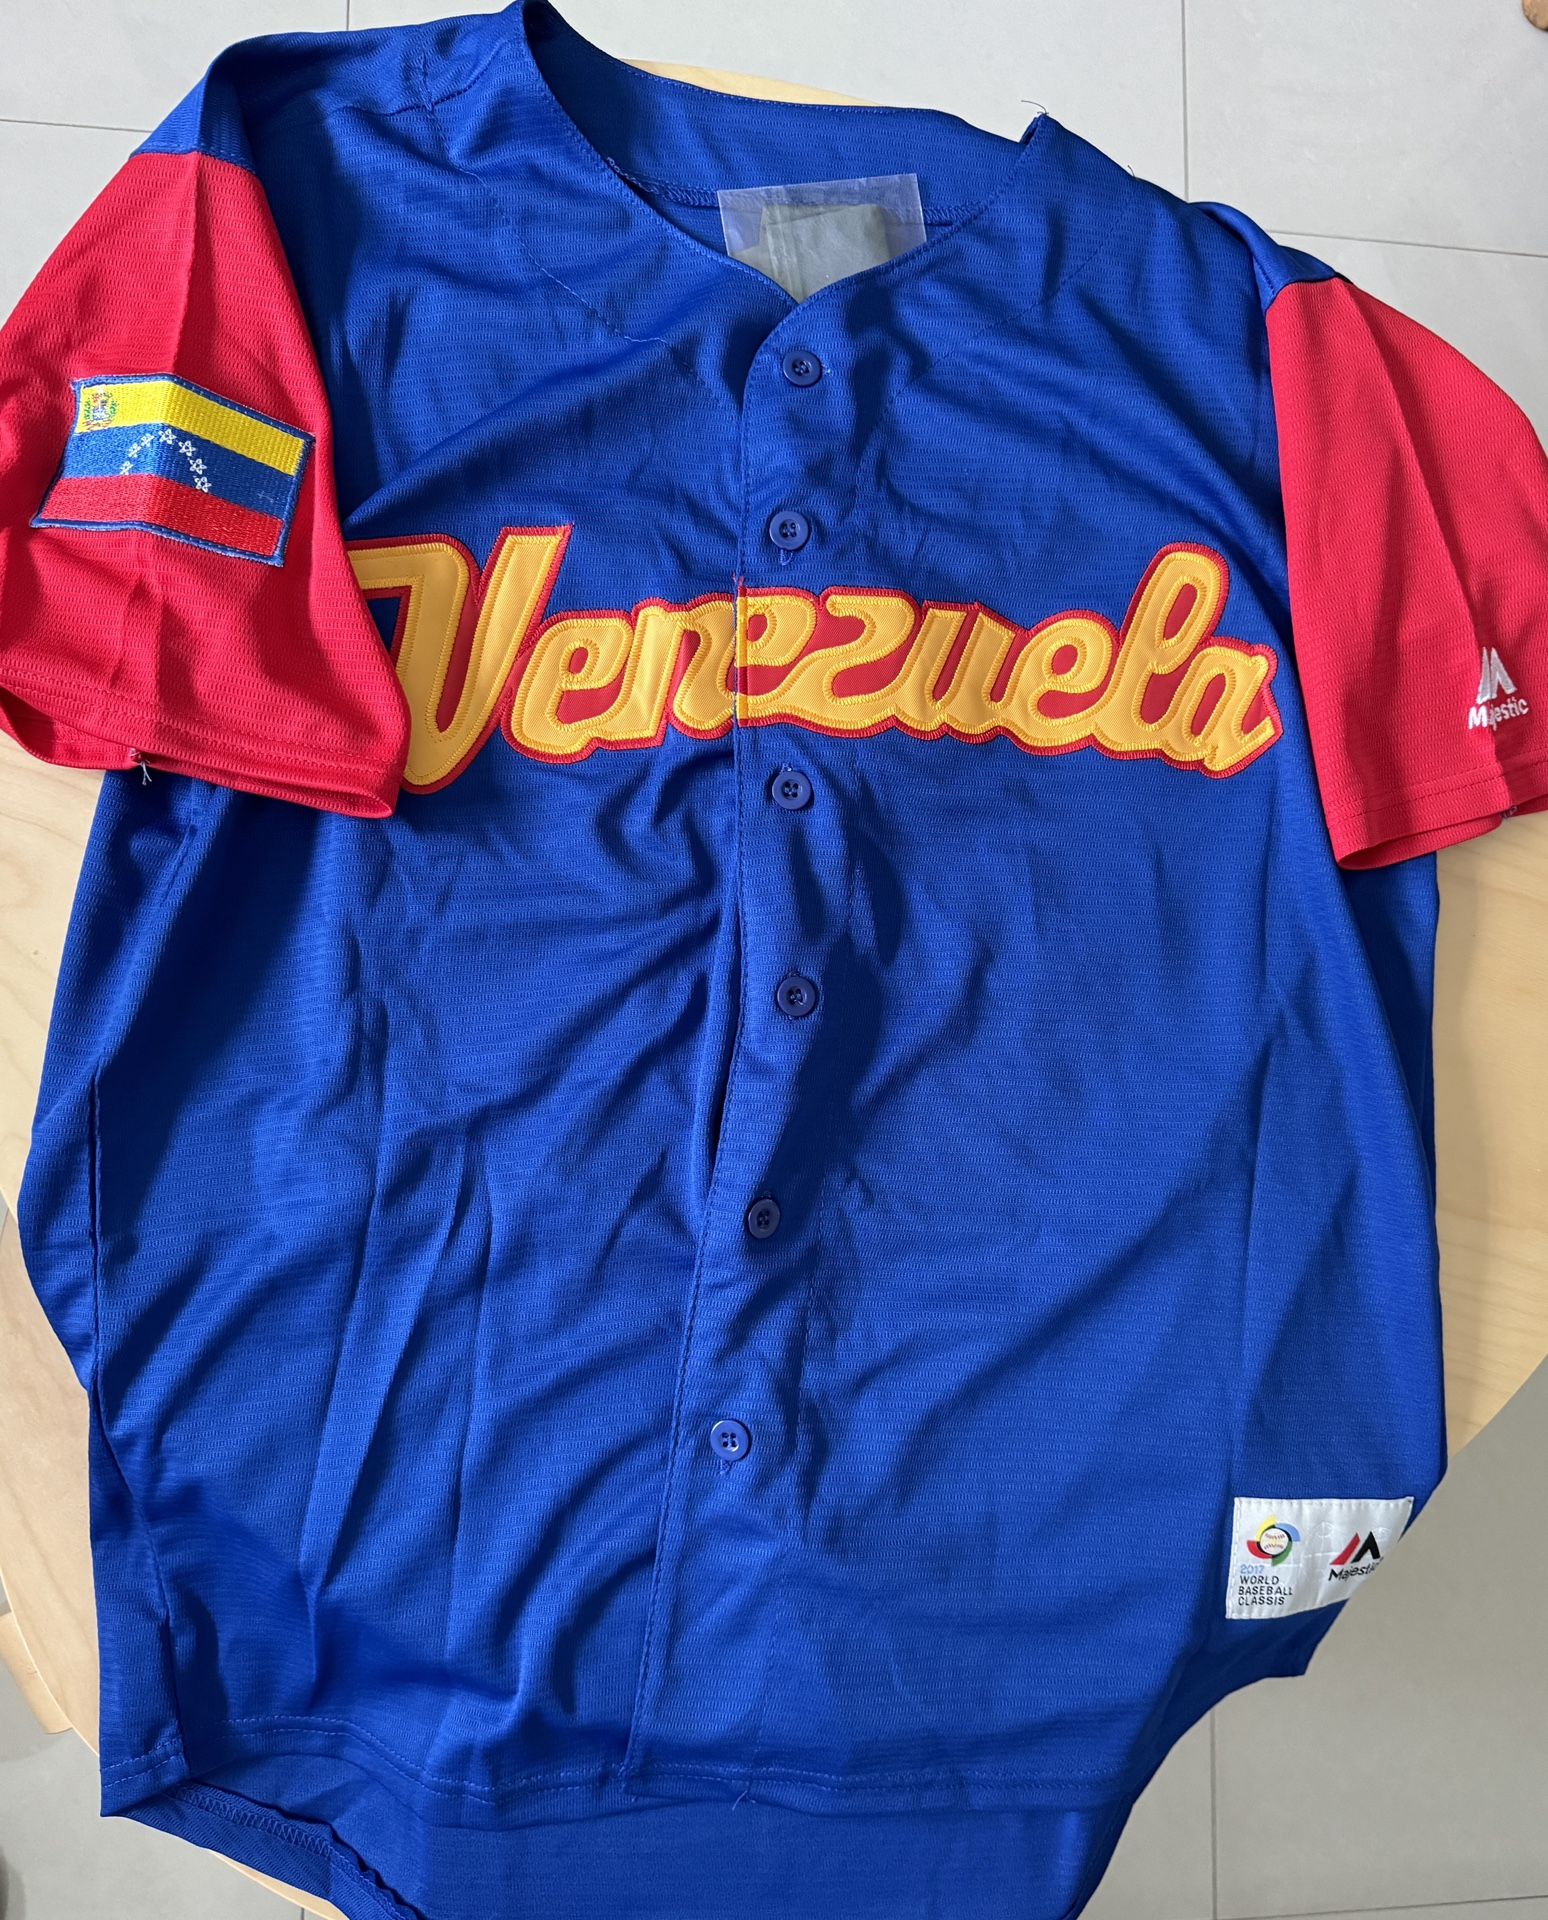 2 jerseys | Venezuela Baseball And Dodgers